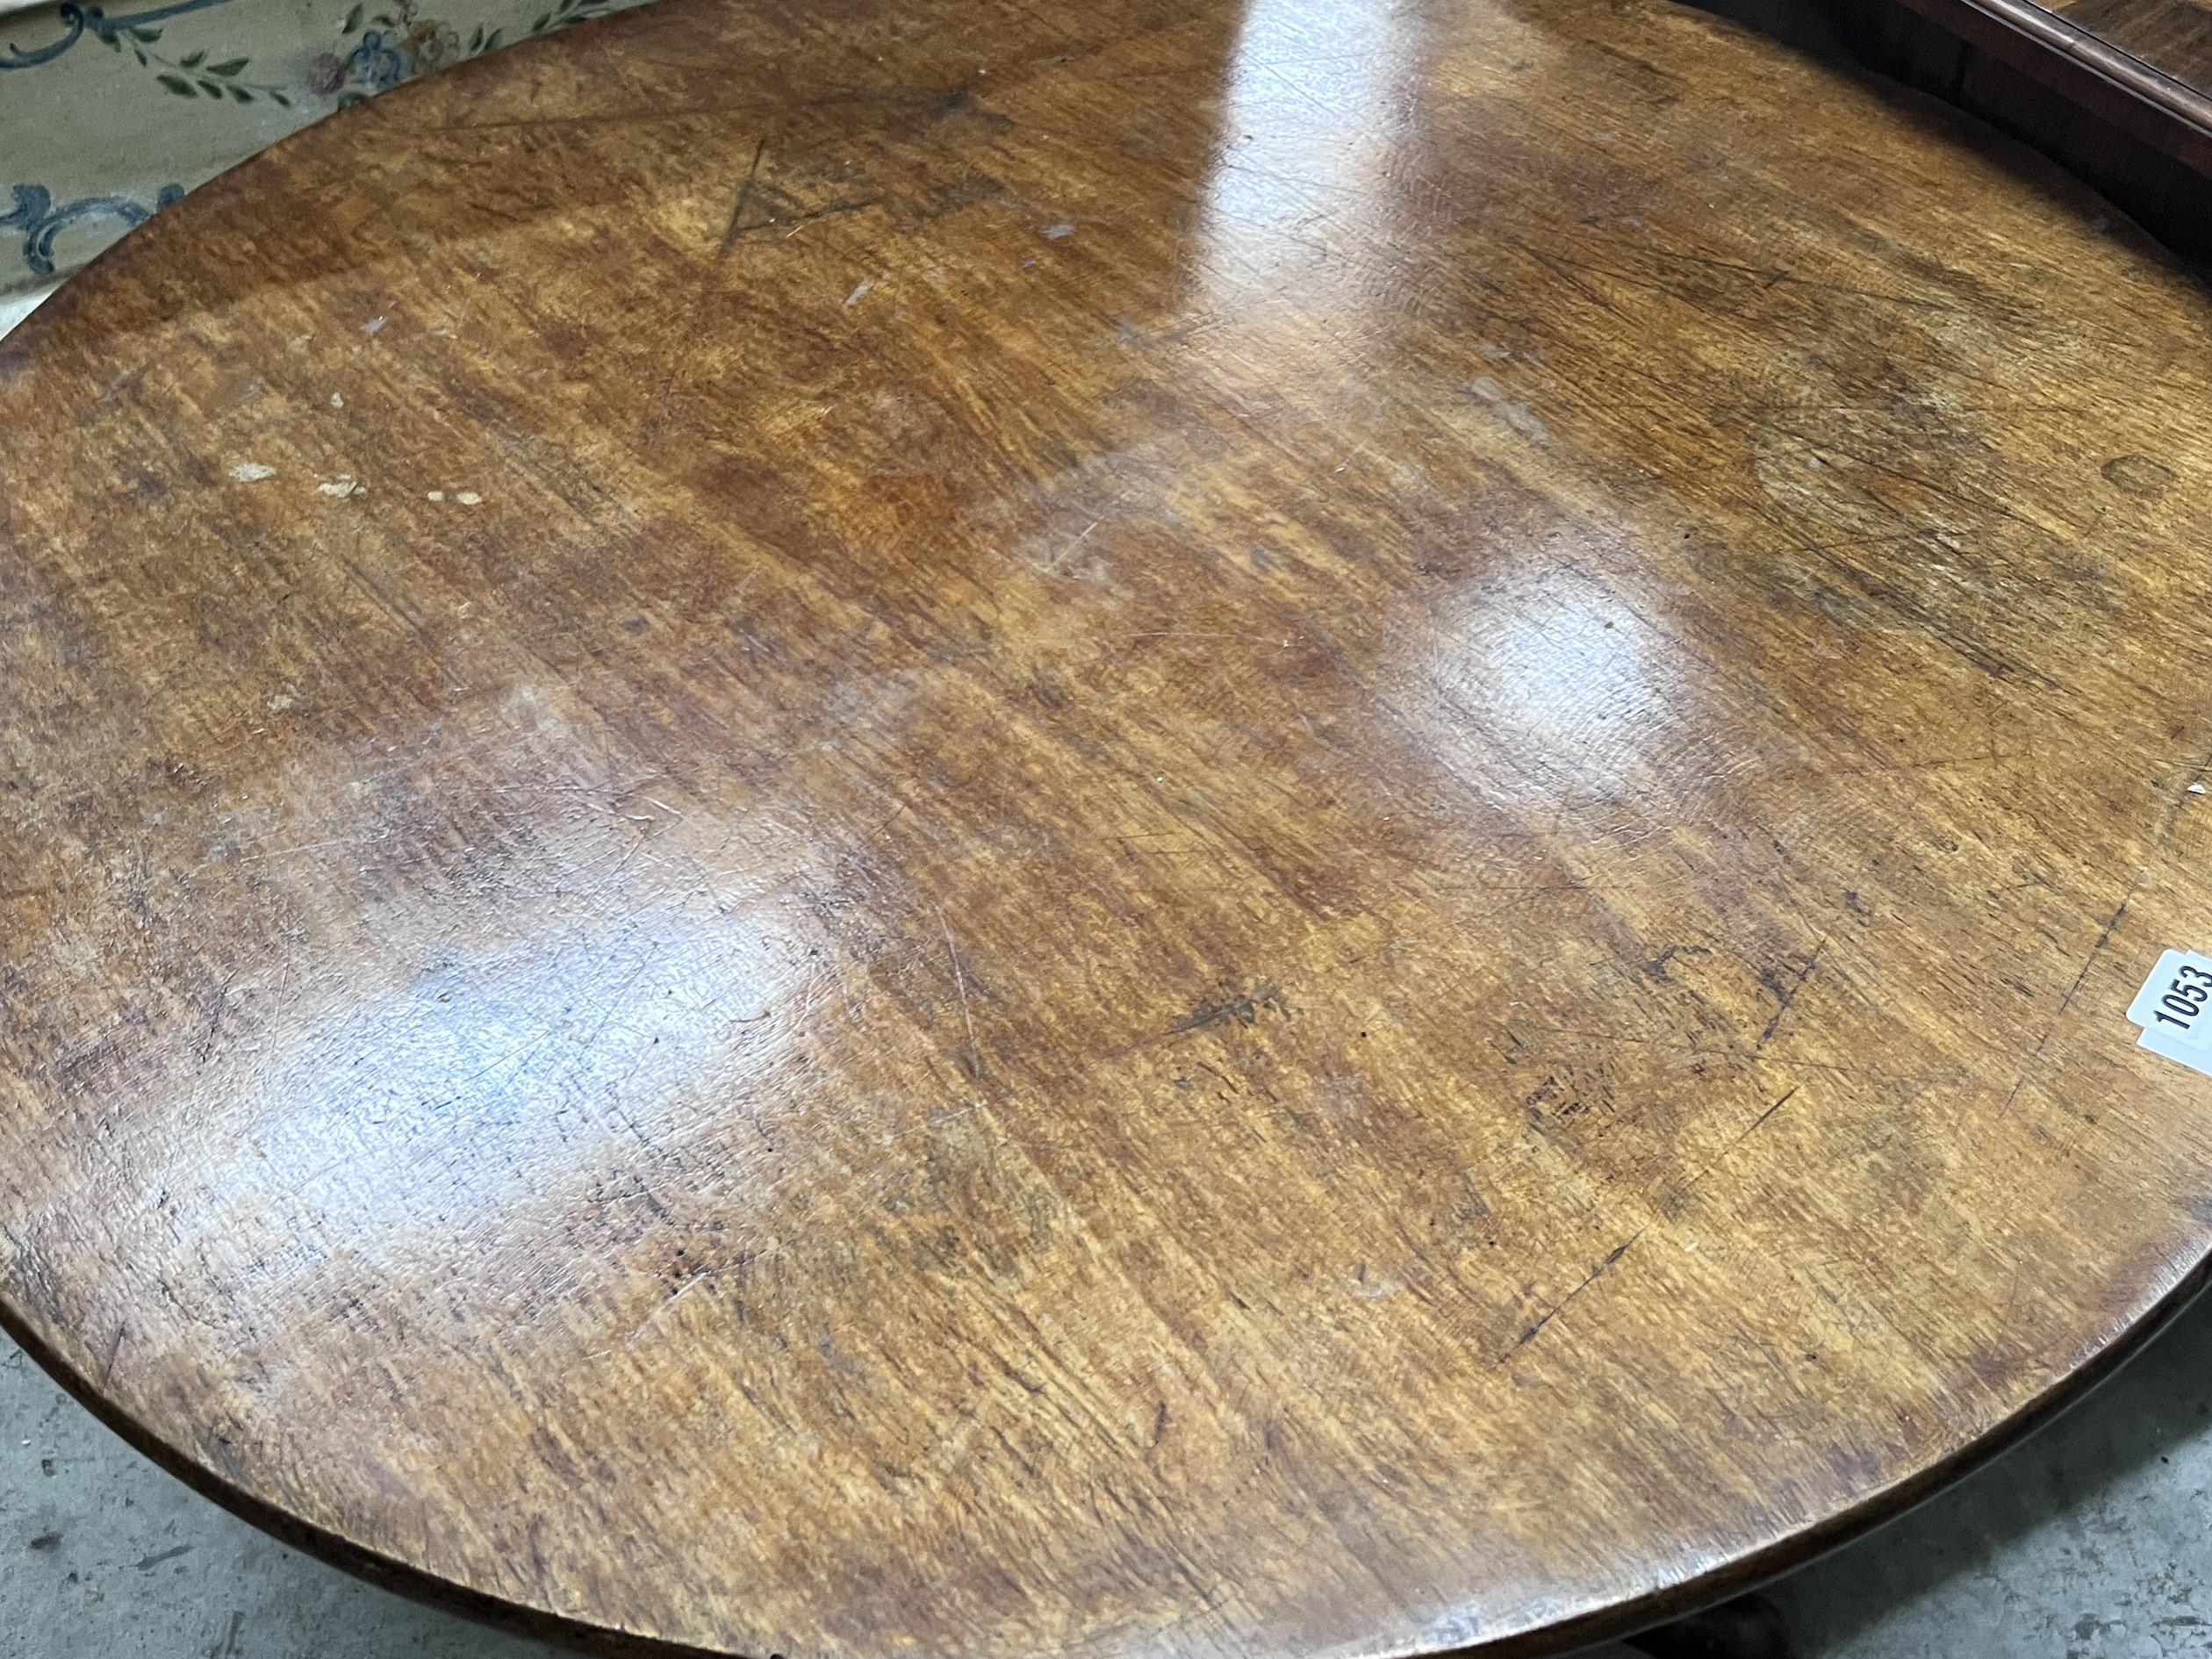 A George III mahogany circular tilt top tea table, diameter 91cm, height 70cm